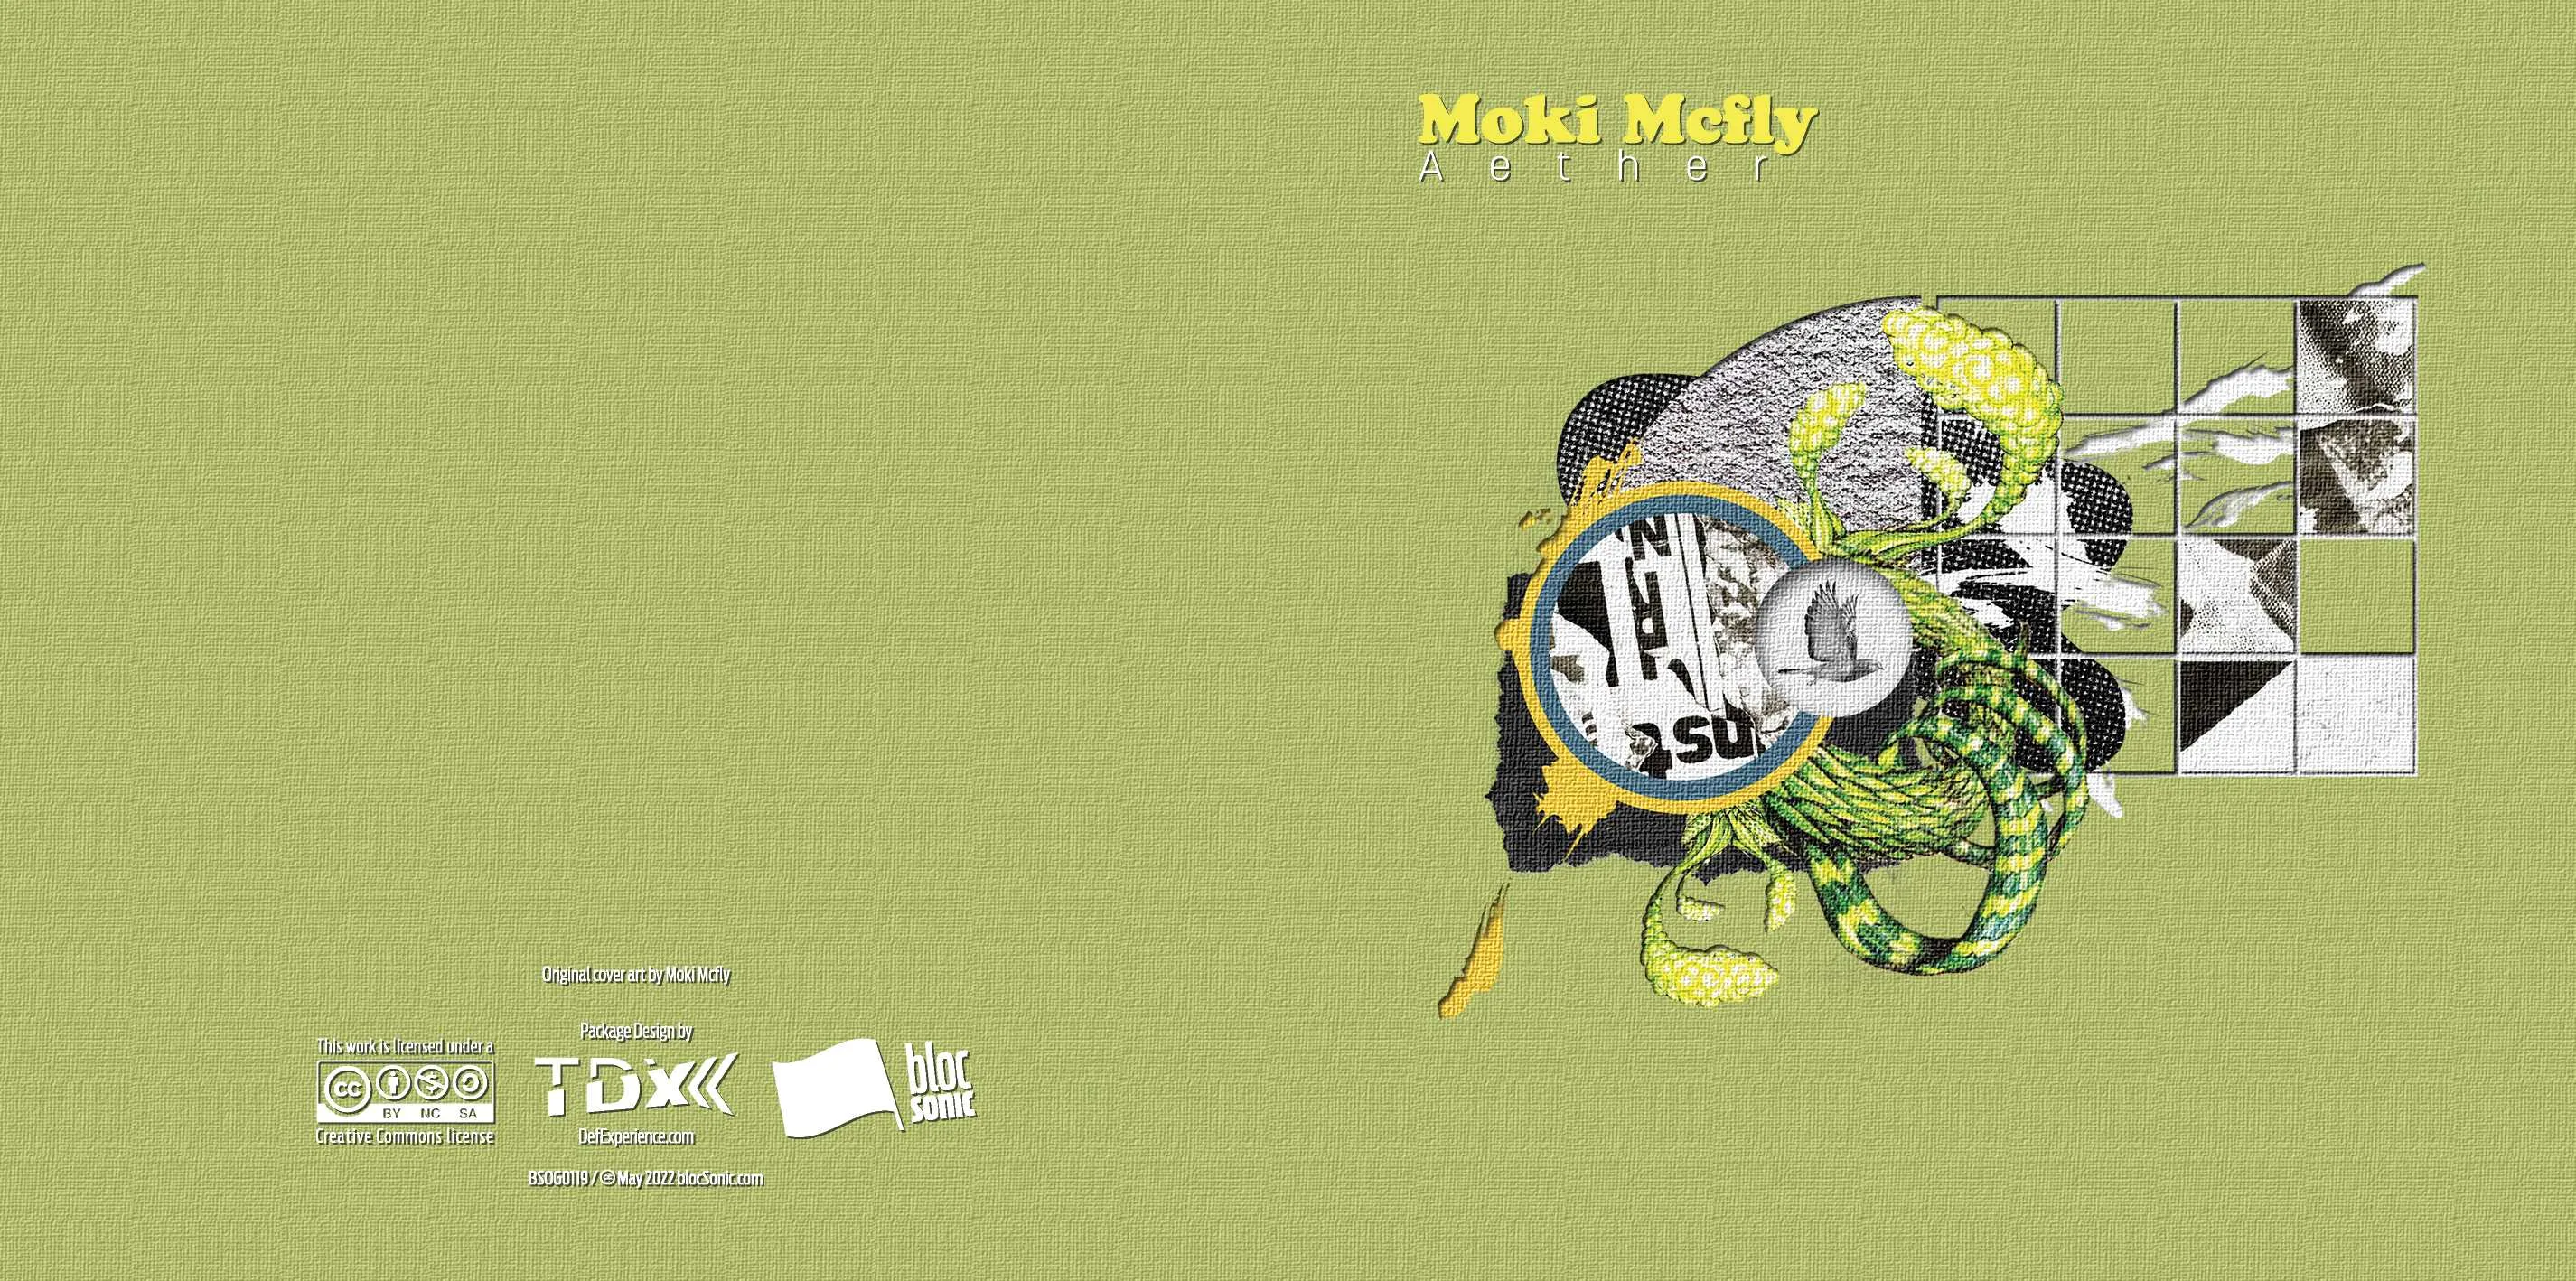 Album insert for “Aether” by Moki Mcfly